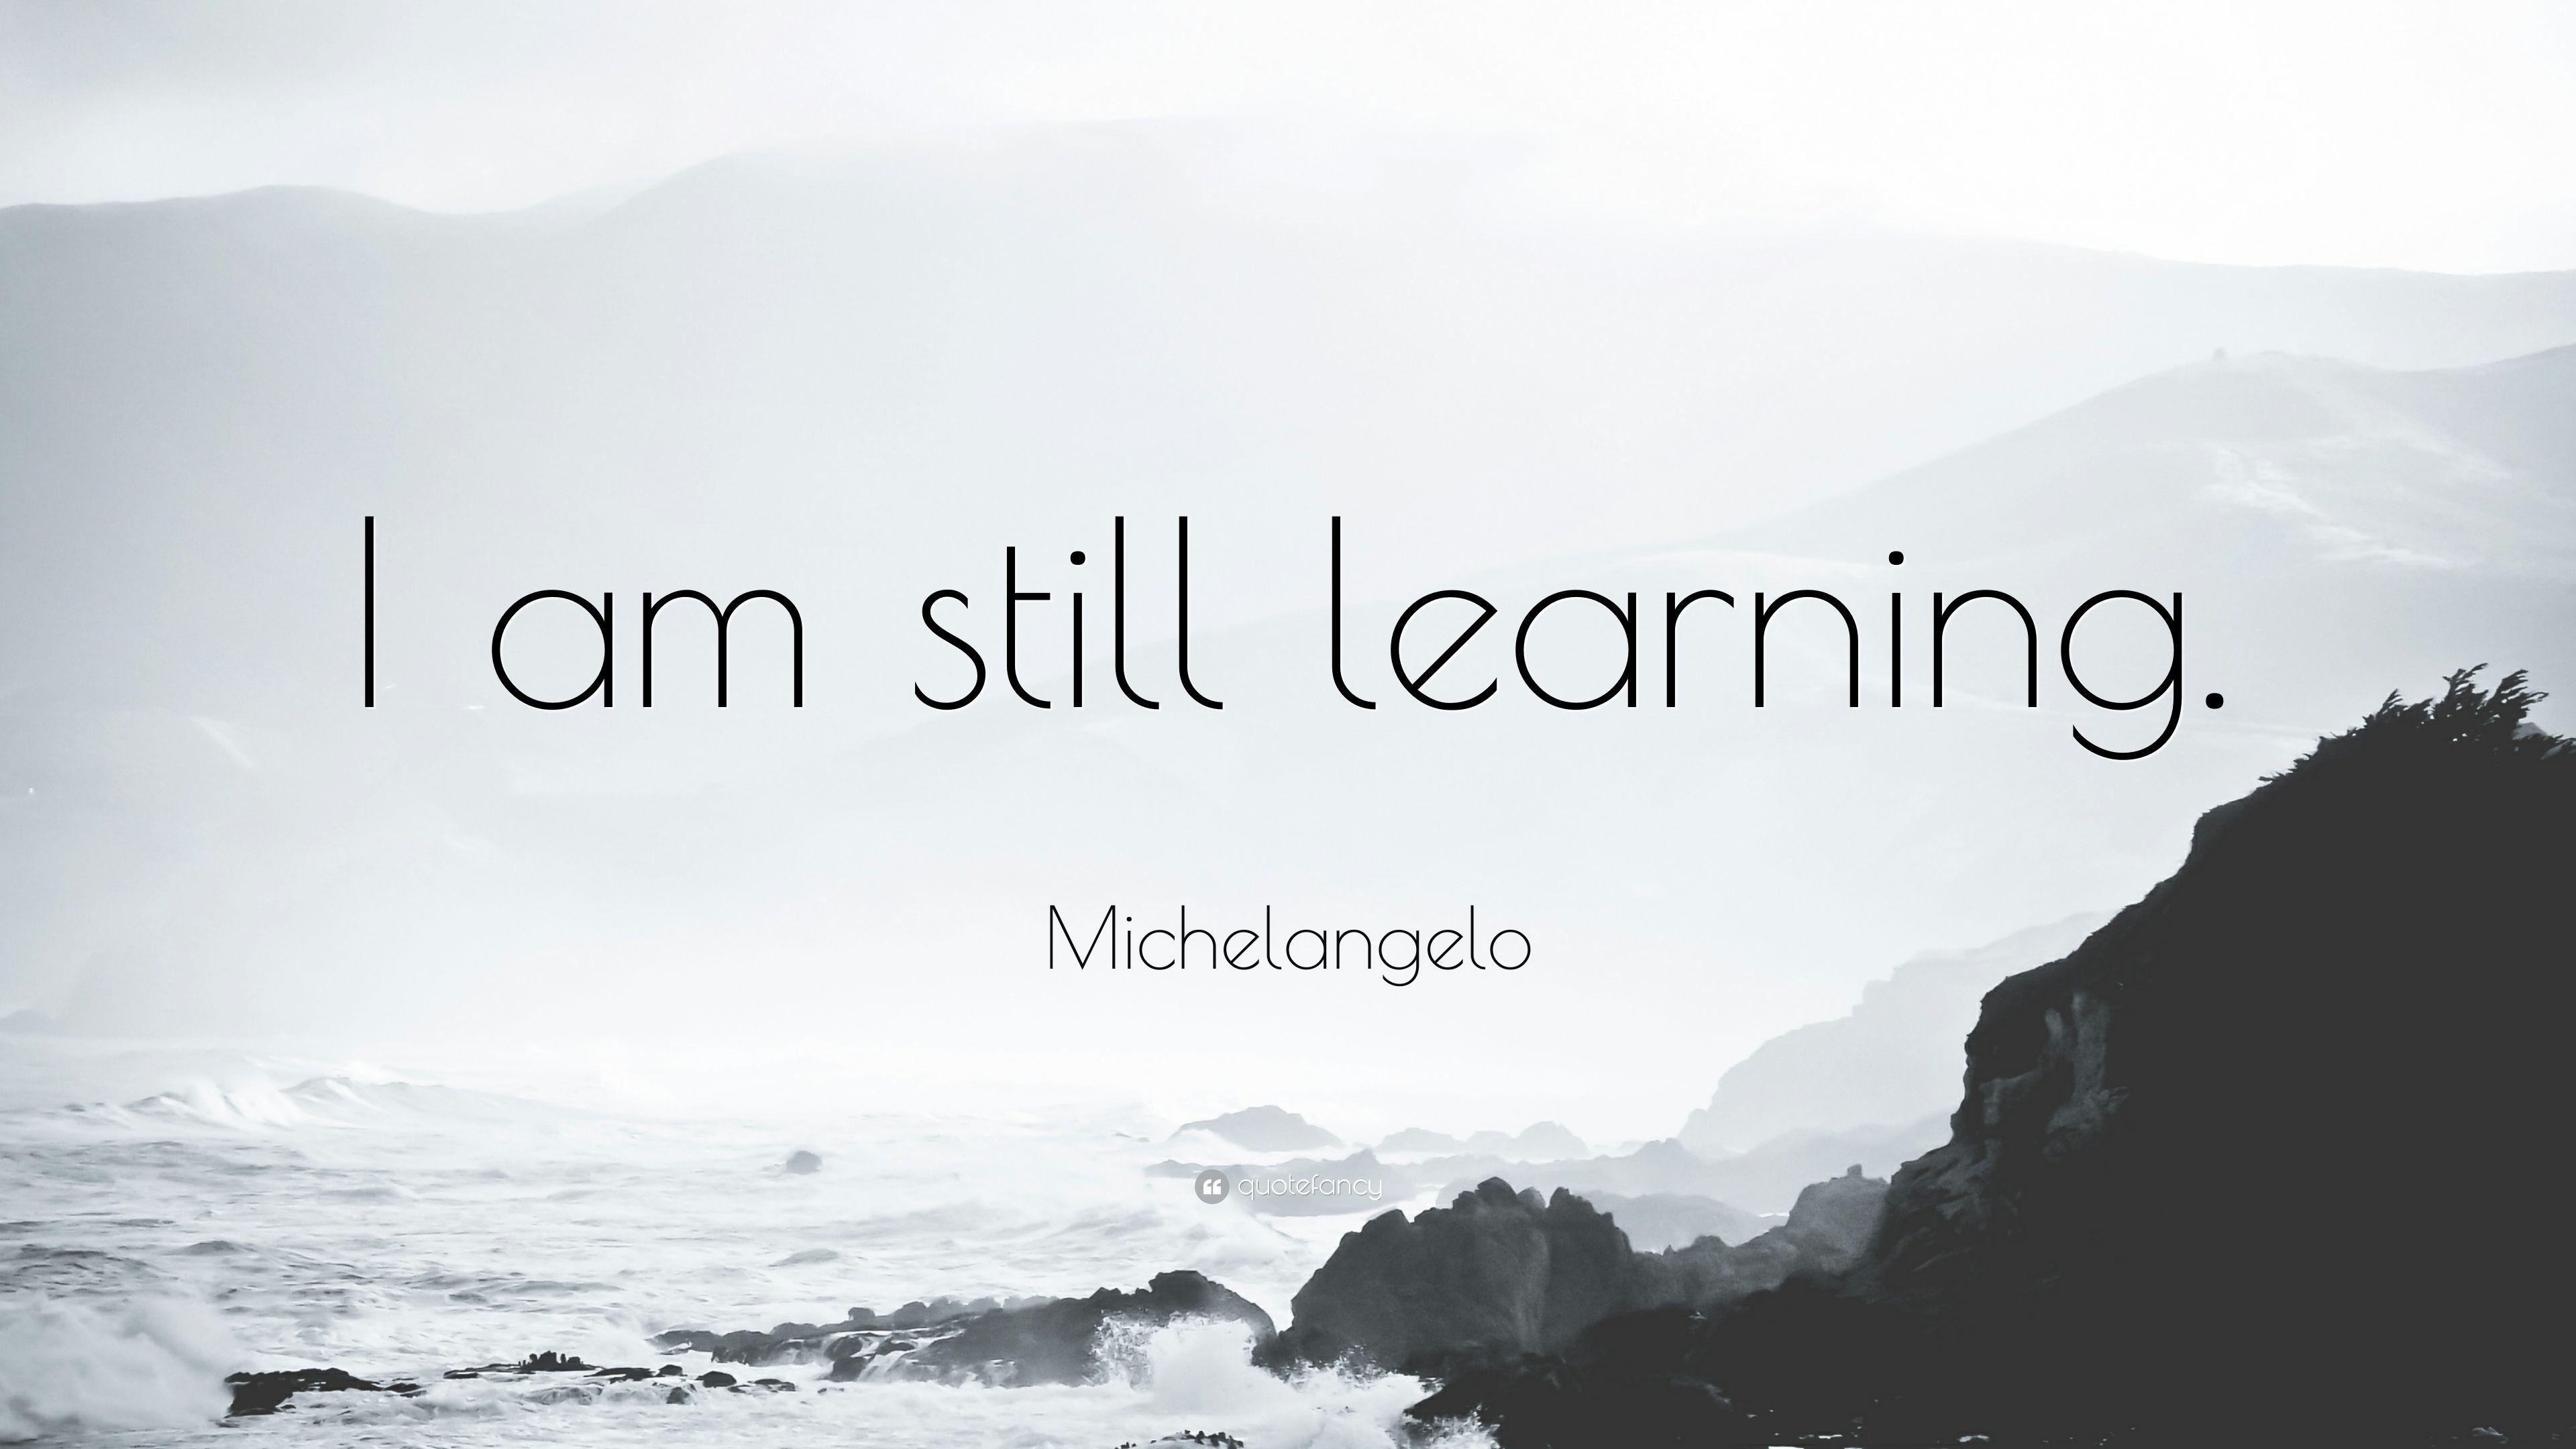 Michelangelo Quote: “I am still learning.” 10 wallpaper